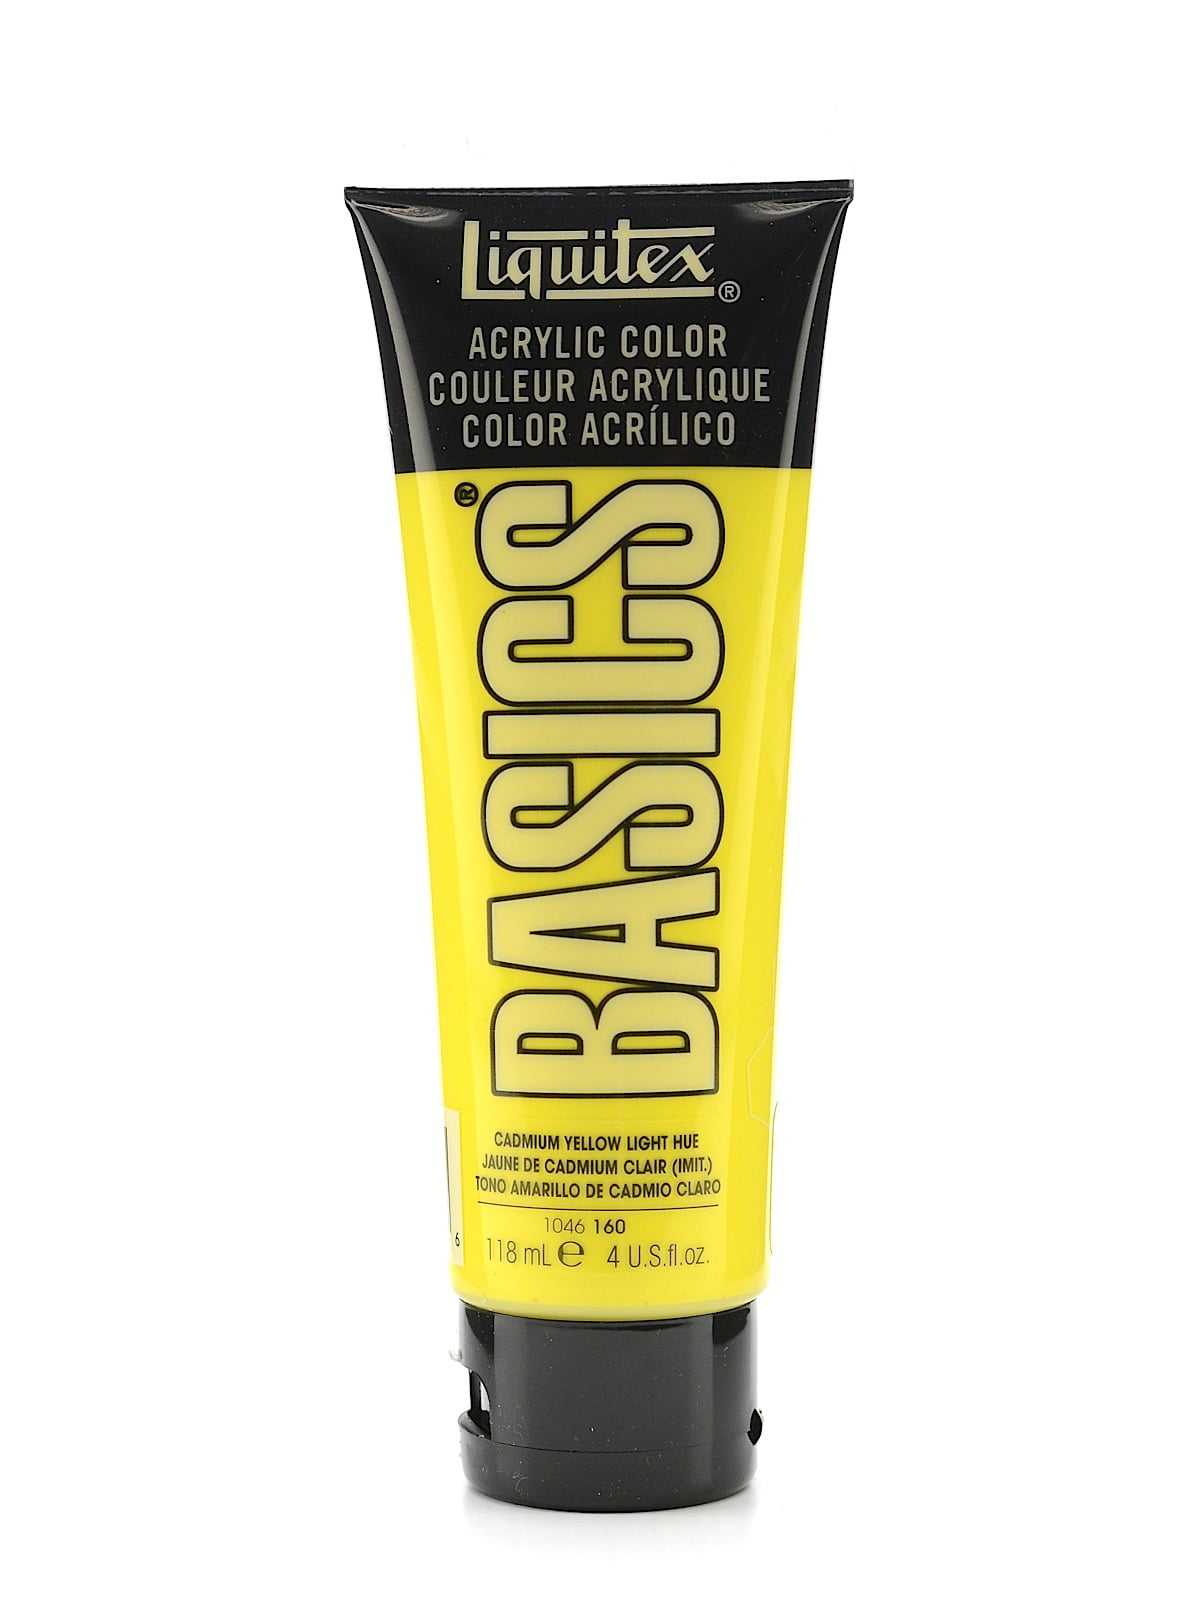 Liquitex Basics Acrylic Paint - Cadmium Yellow Light Hue, 4oz Tube